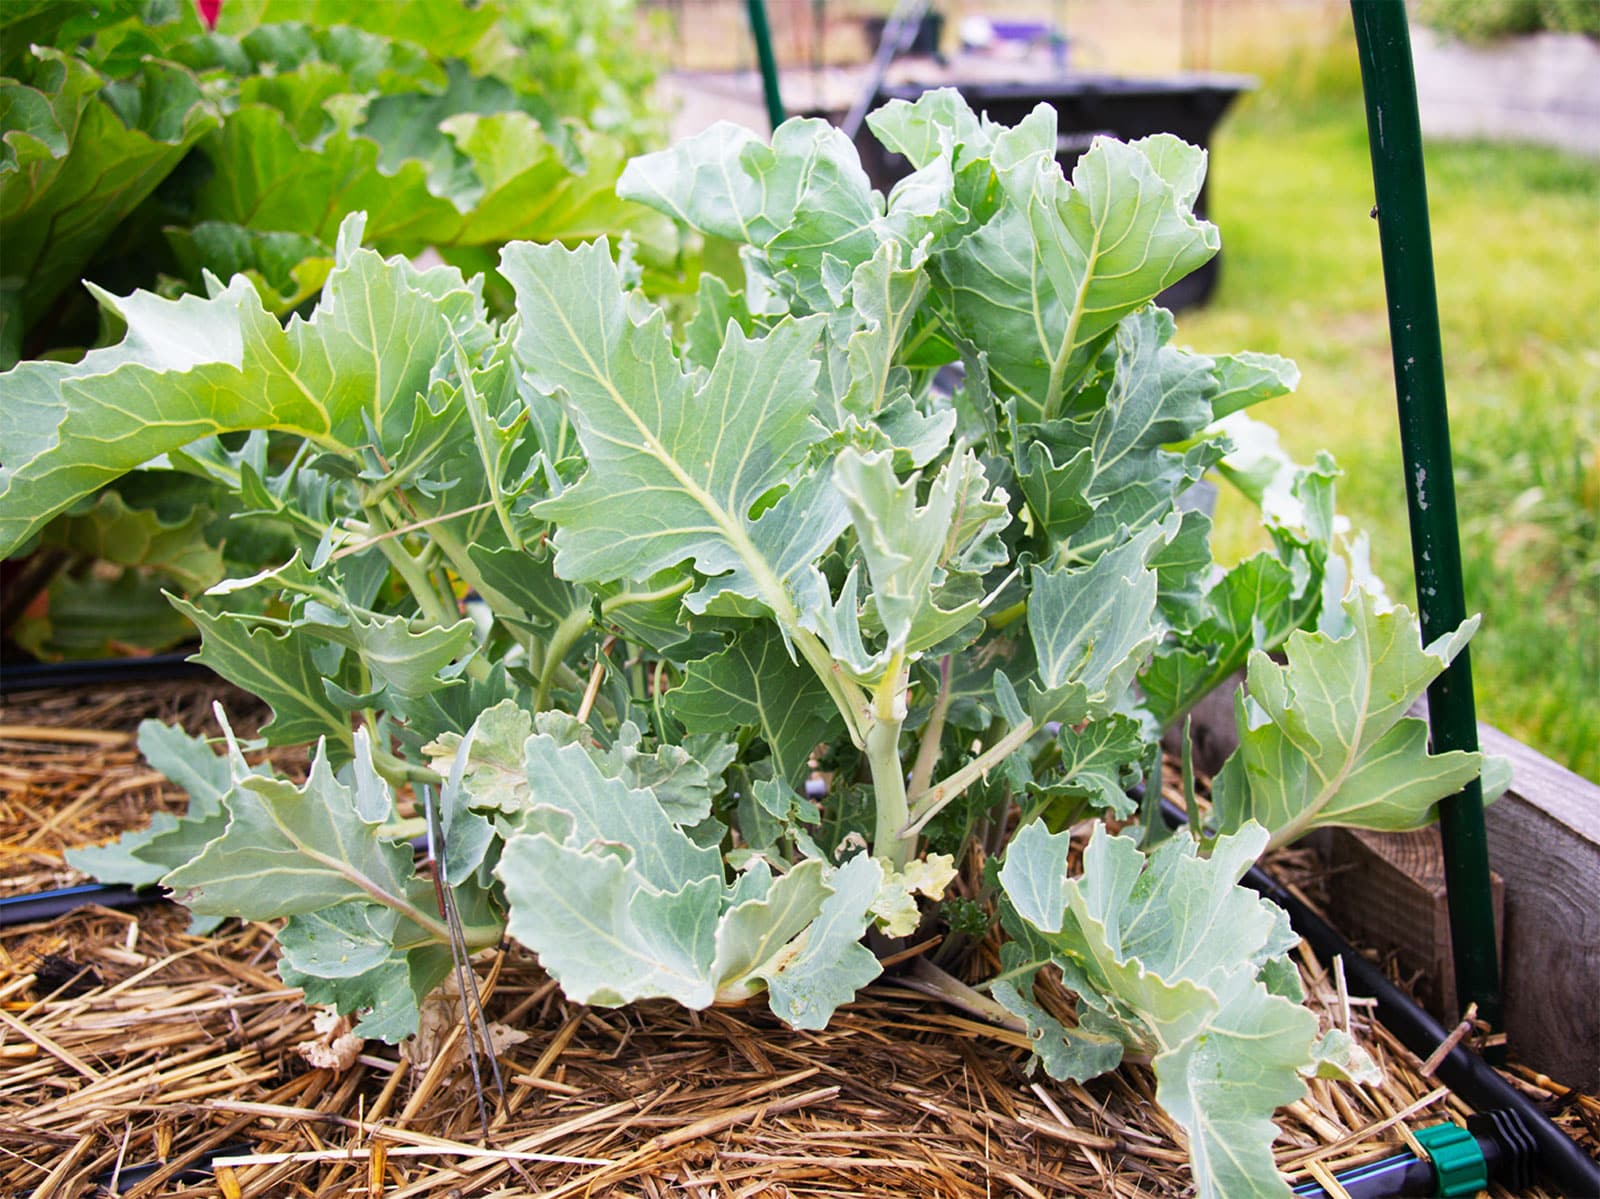 Sea kale growing in a raised garden bed